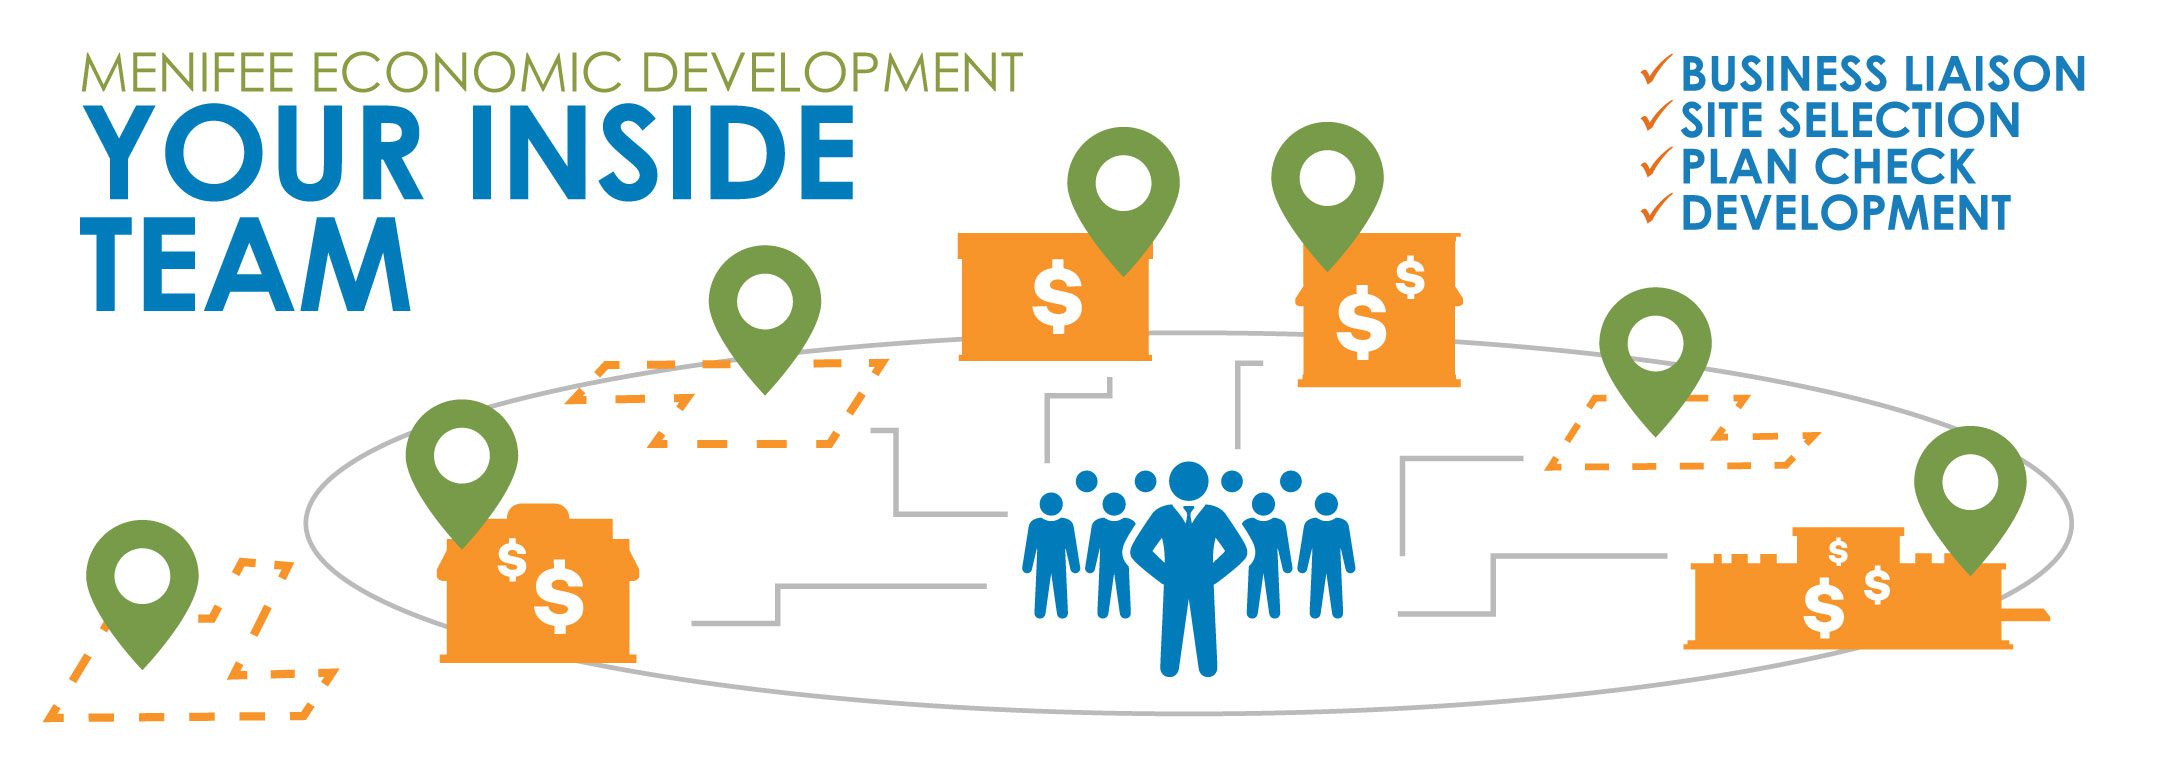 Menifee Economic Development - Your Inside Team